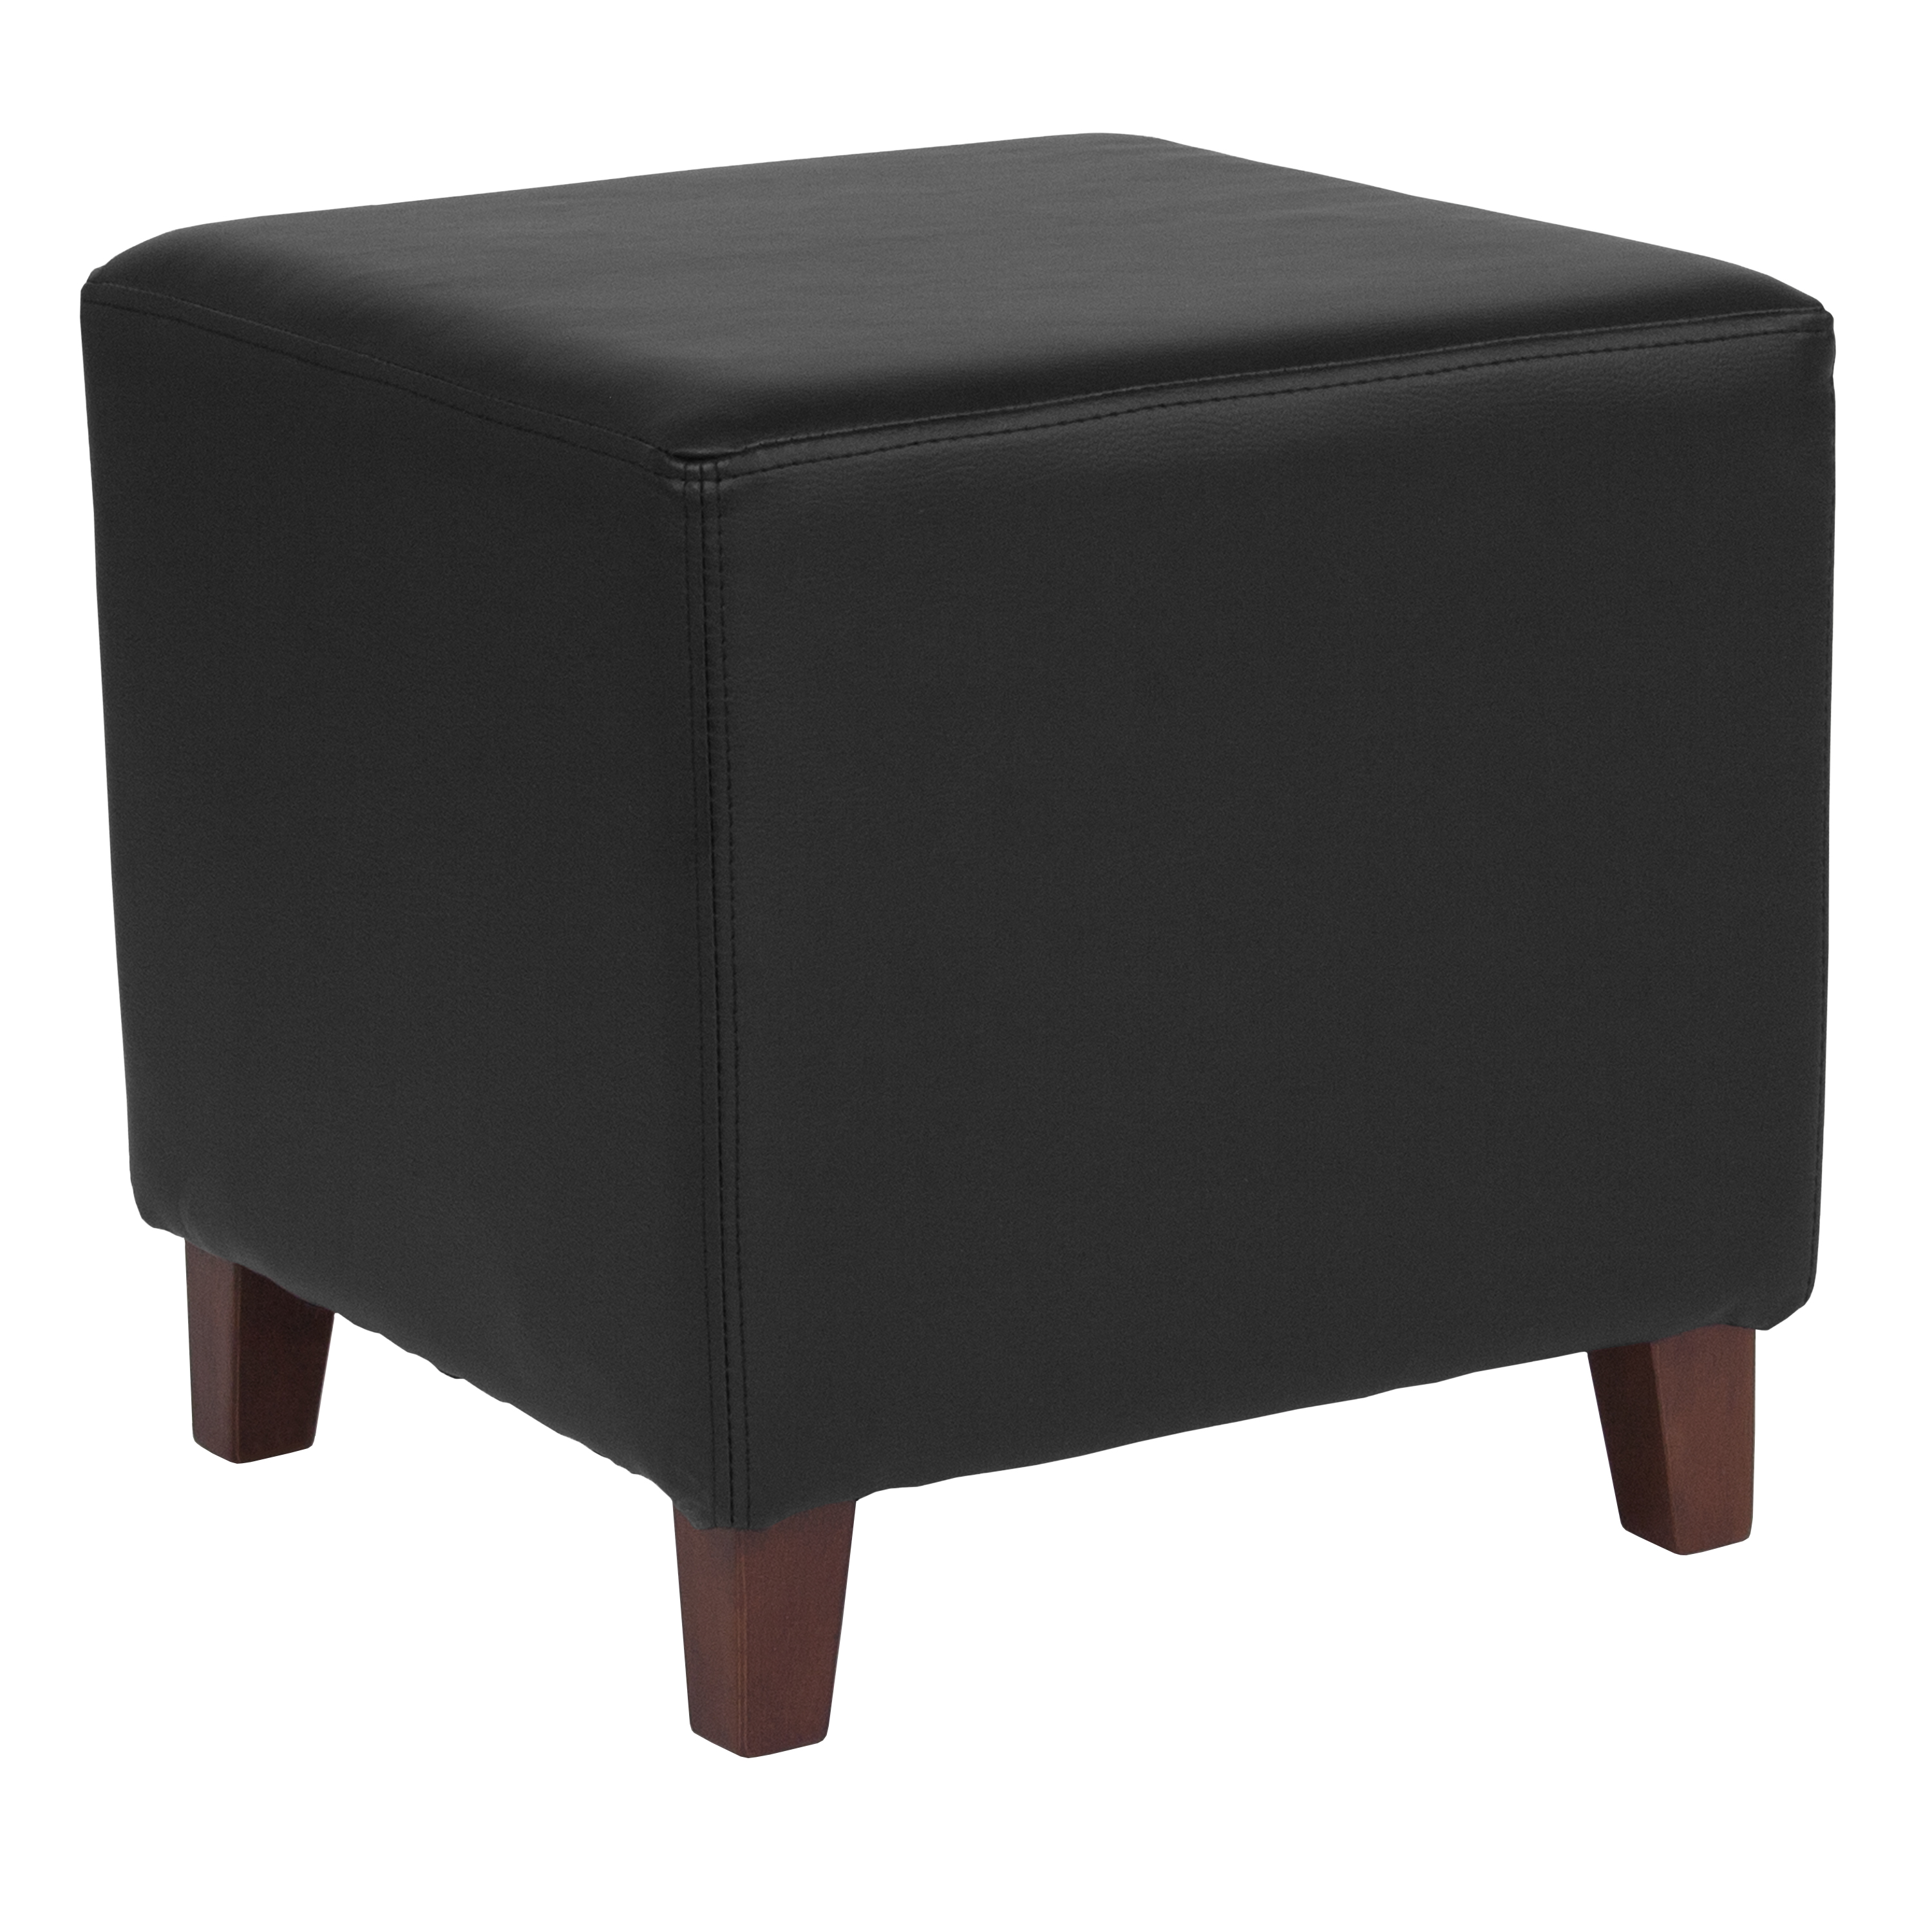 Flash Furniture QY-S09-BKL-GG Black LeatherSoft Fabric Ottoman Pouf